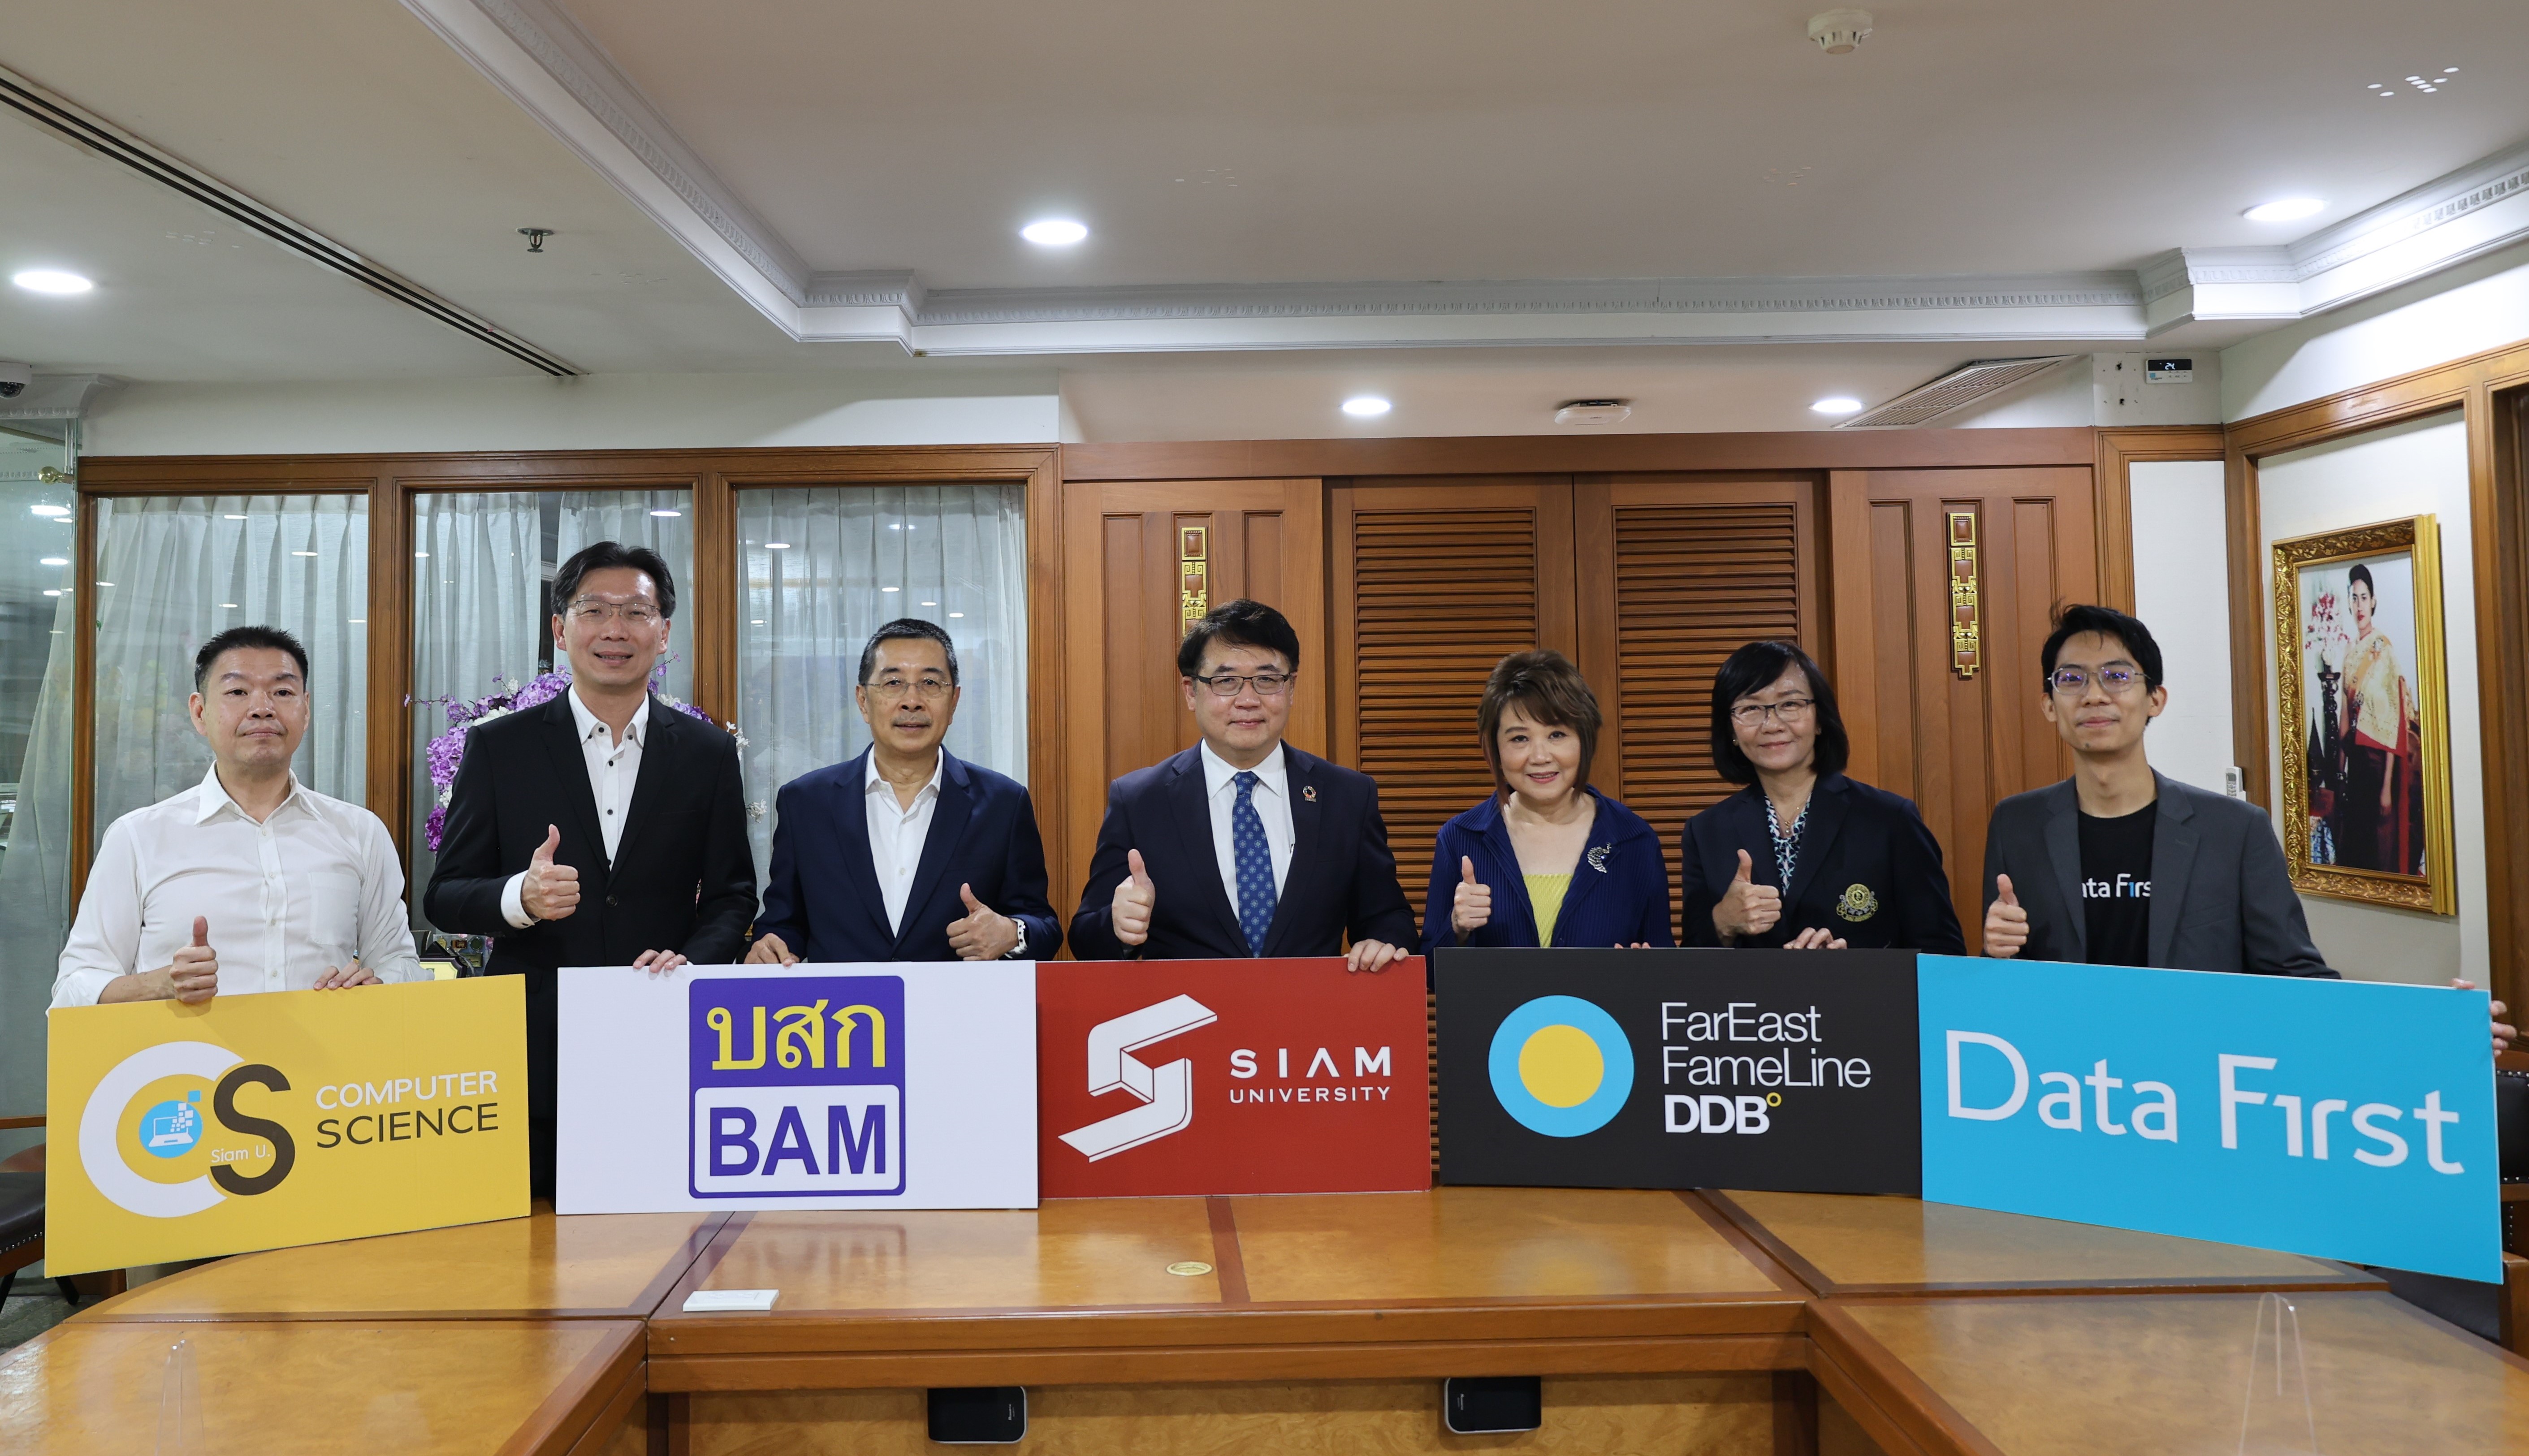 BAM จับมือ มหาวิทยาลัยสยาม, Data First, Far East Fame Line DDBลงนาม MOU ร่วมพัฒนาบุคลากร